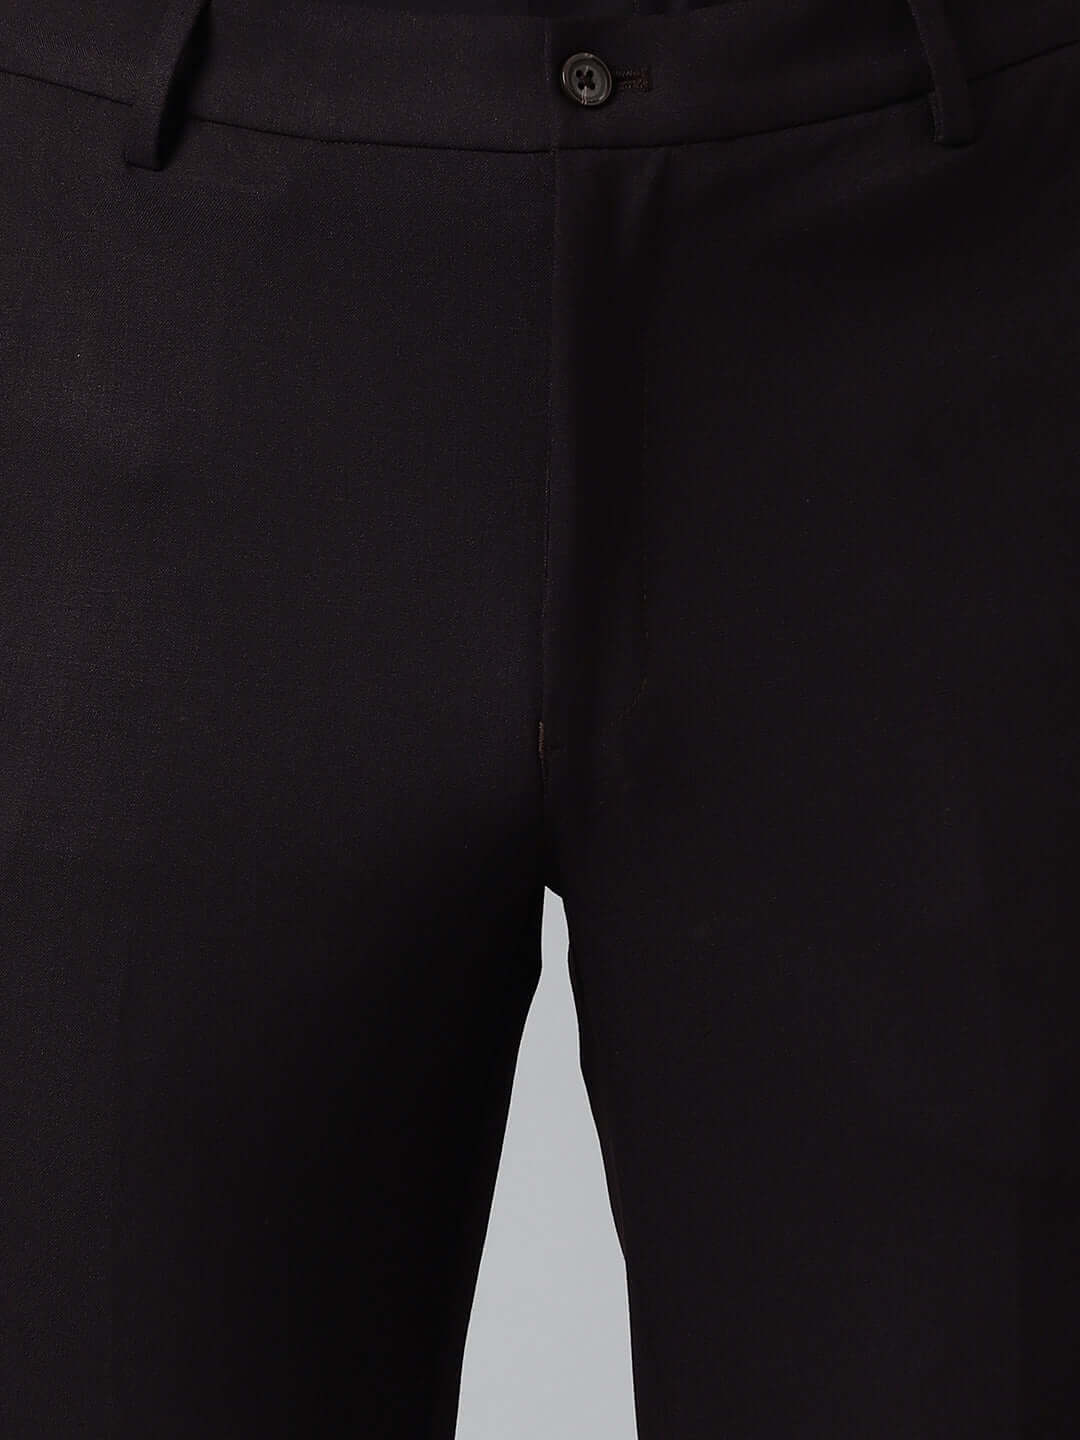 Flex Waist 4-Way Stretch Formal Trousers in Dark Wine- Slim Fit